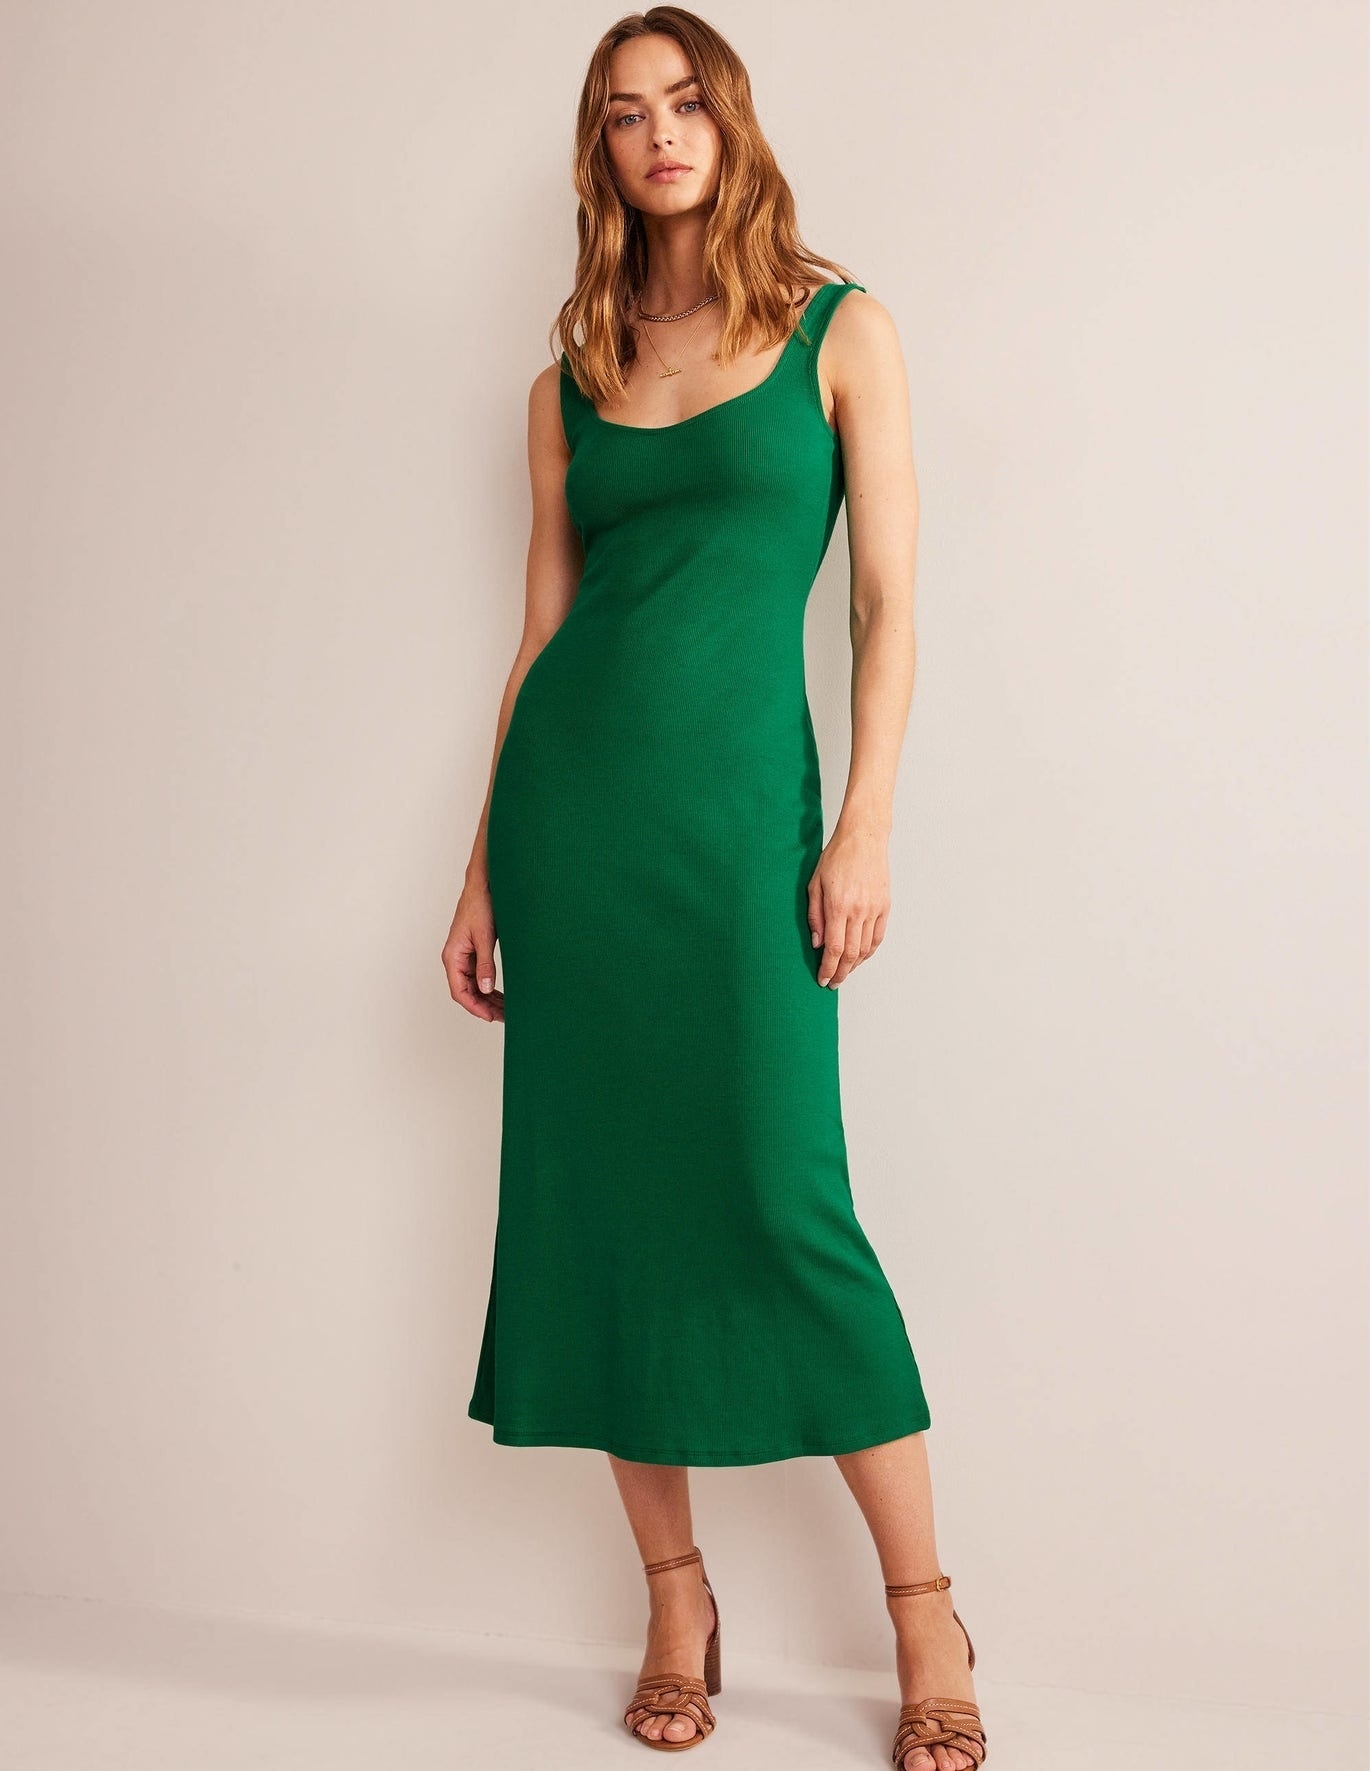 A model wearing a green dress.